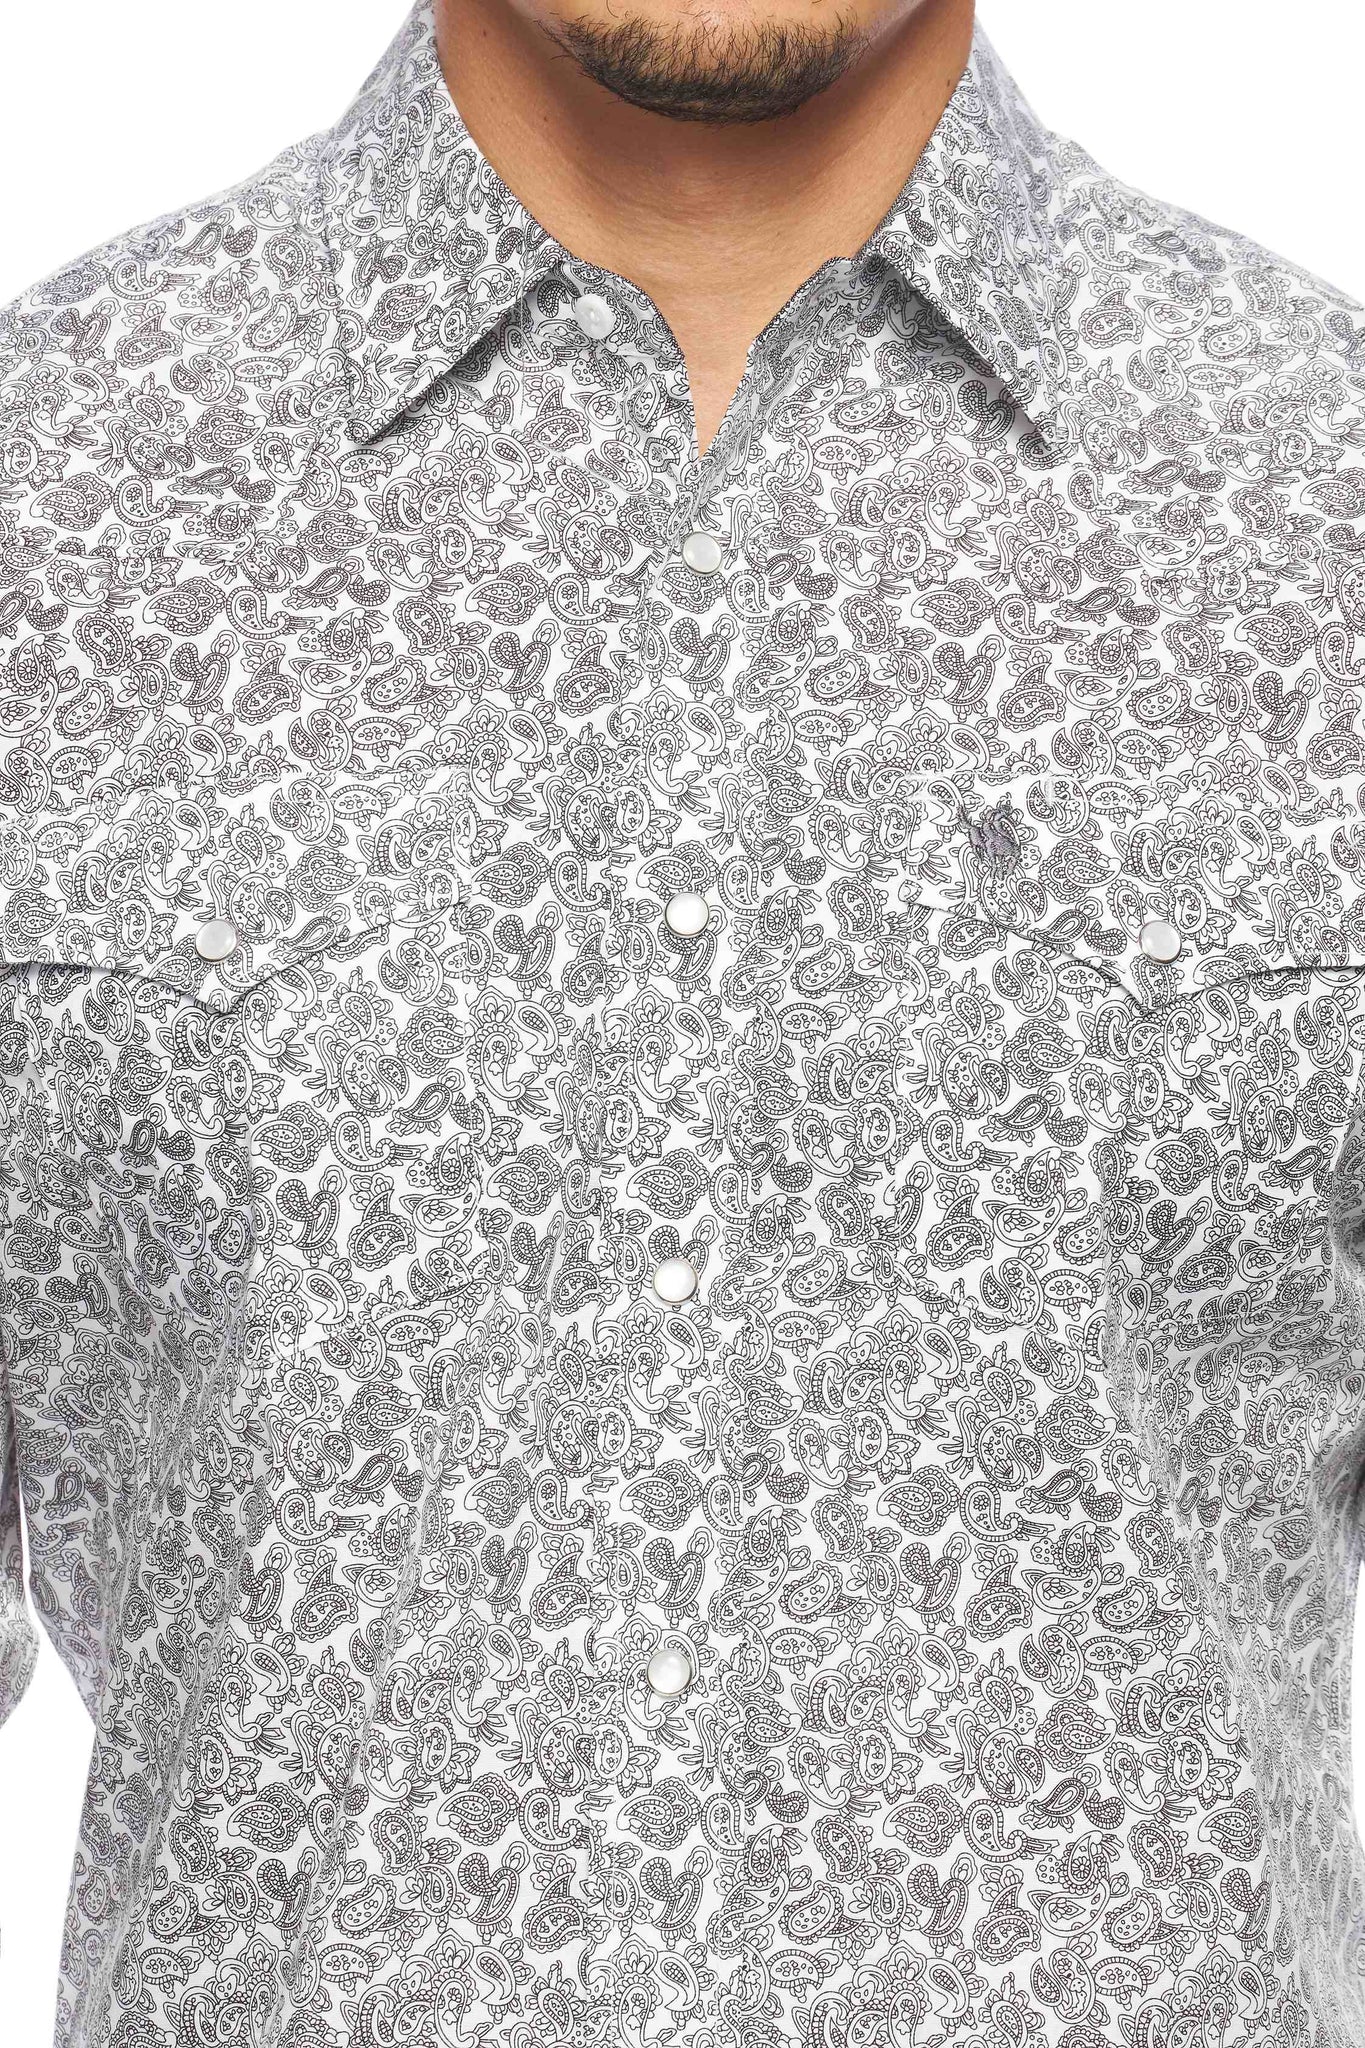 Men's Western Pearl Snap Print Shirt - PS100L-171